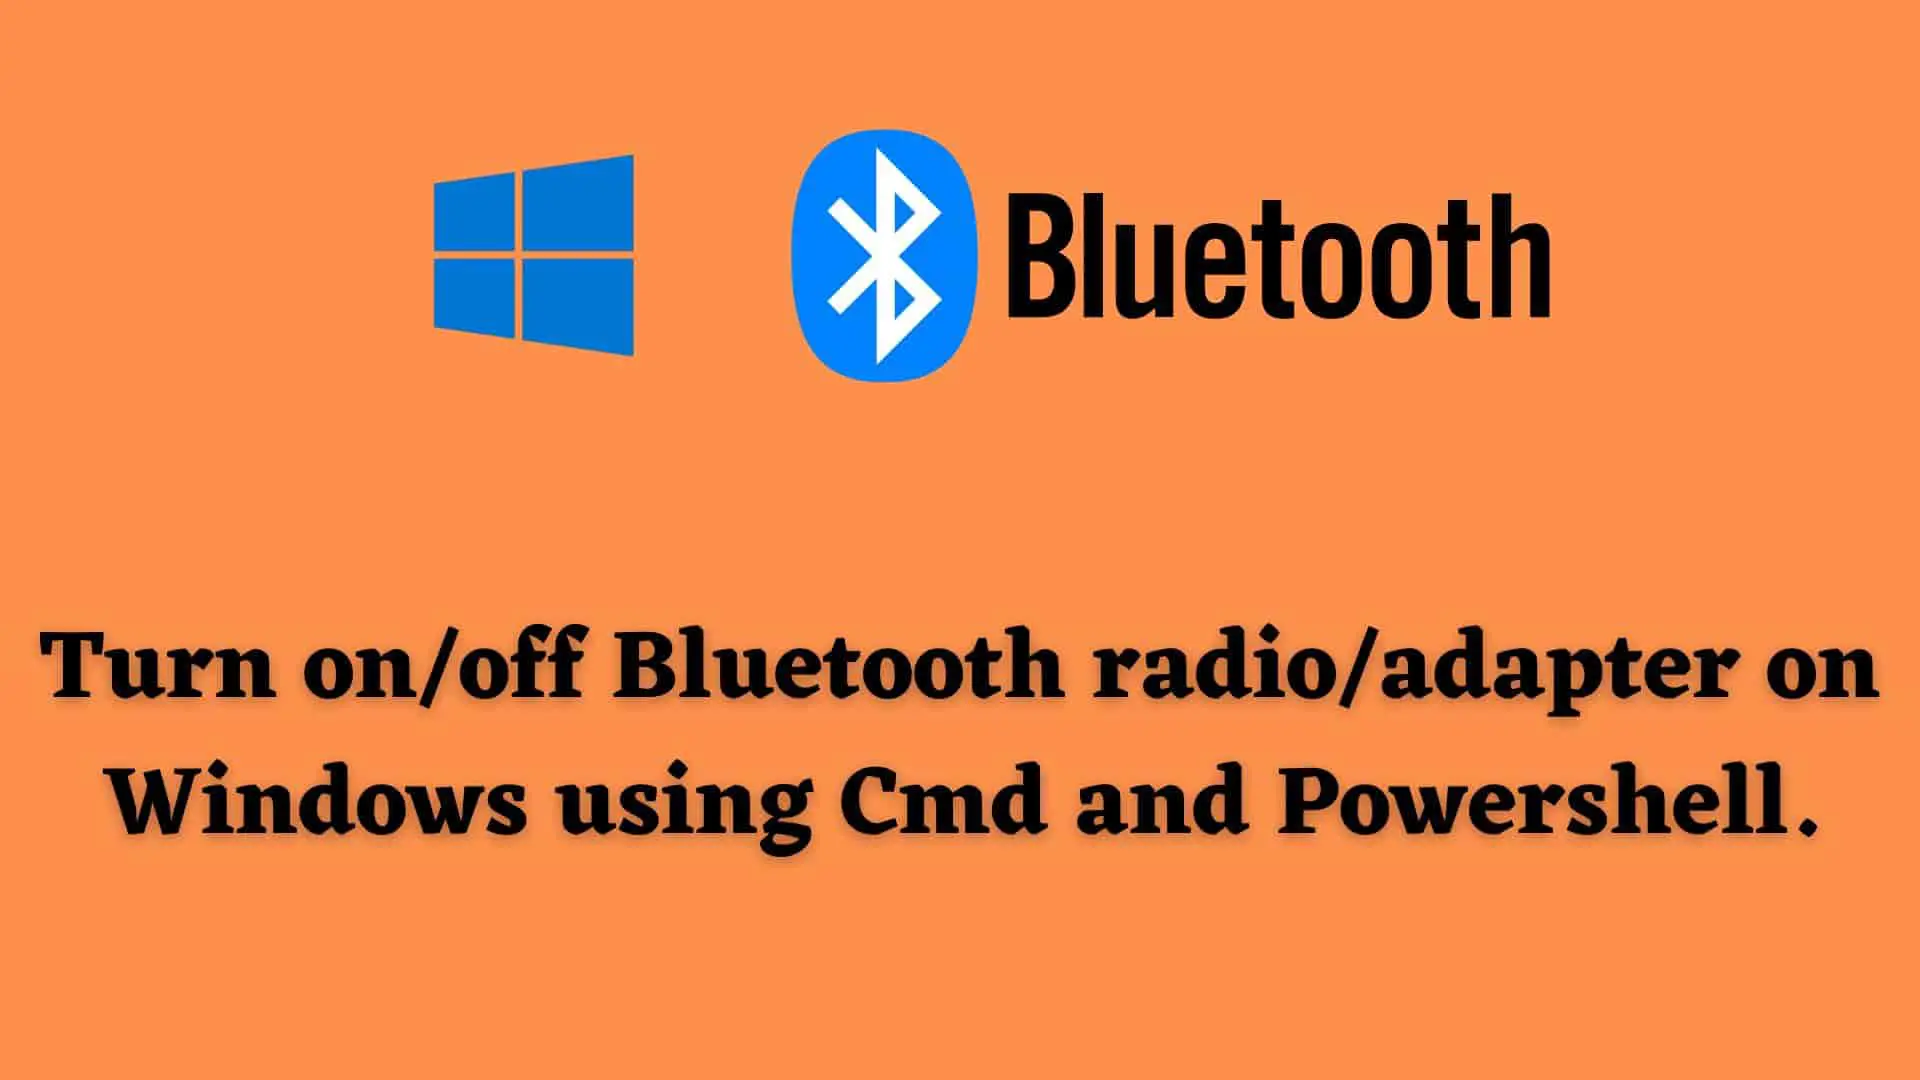 turn-on-off-bluetooth-windows-using-powershell-cmd